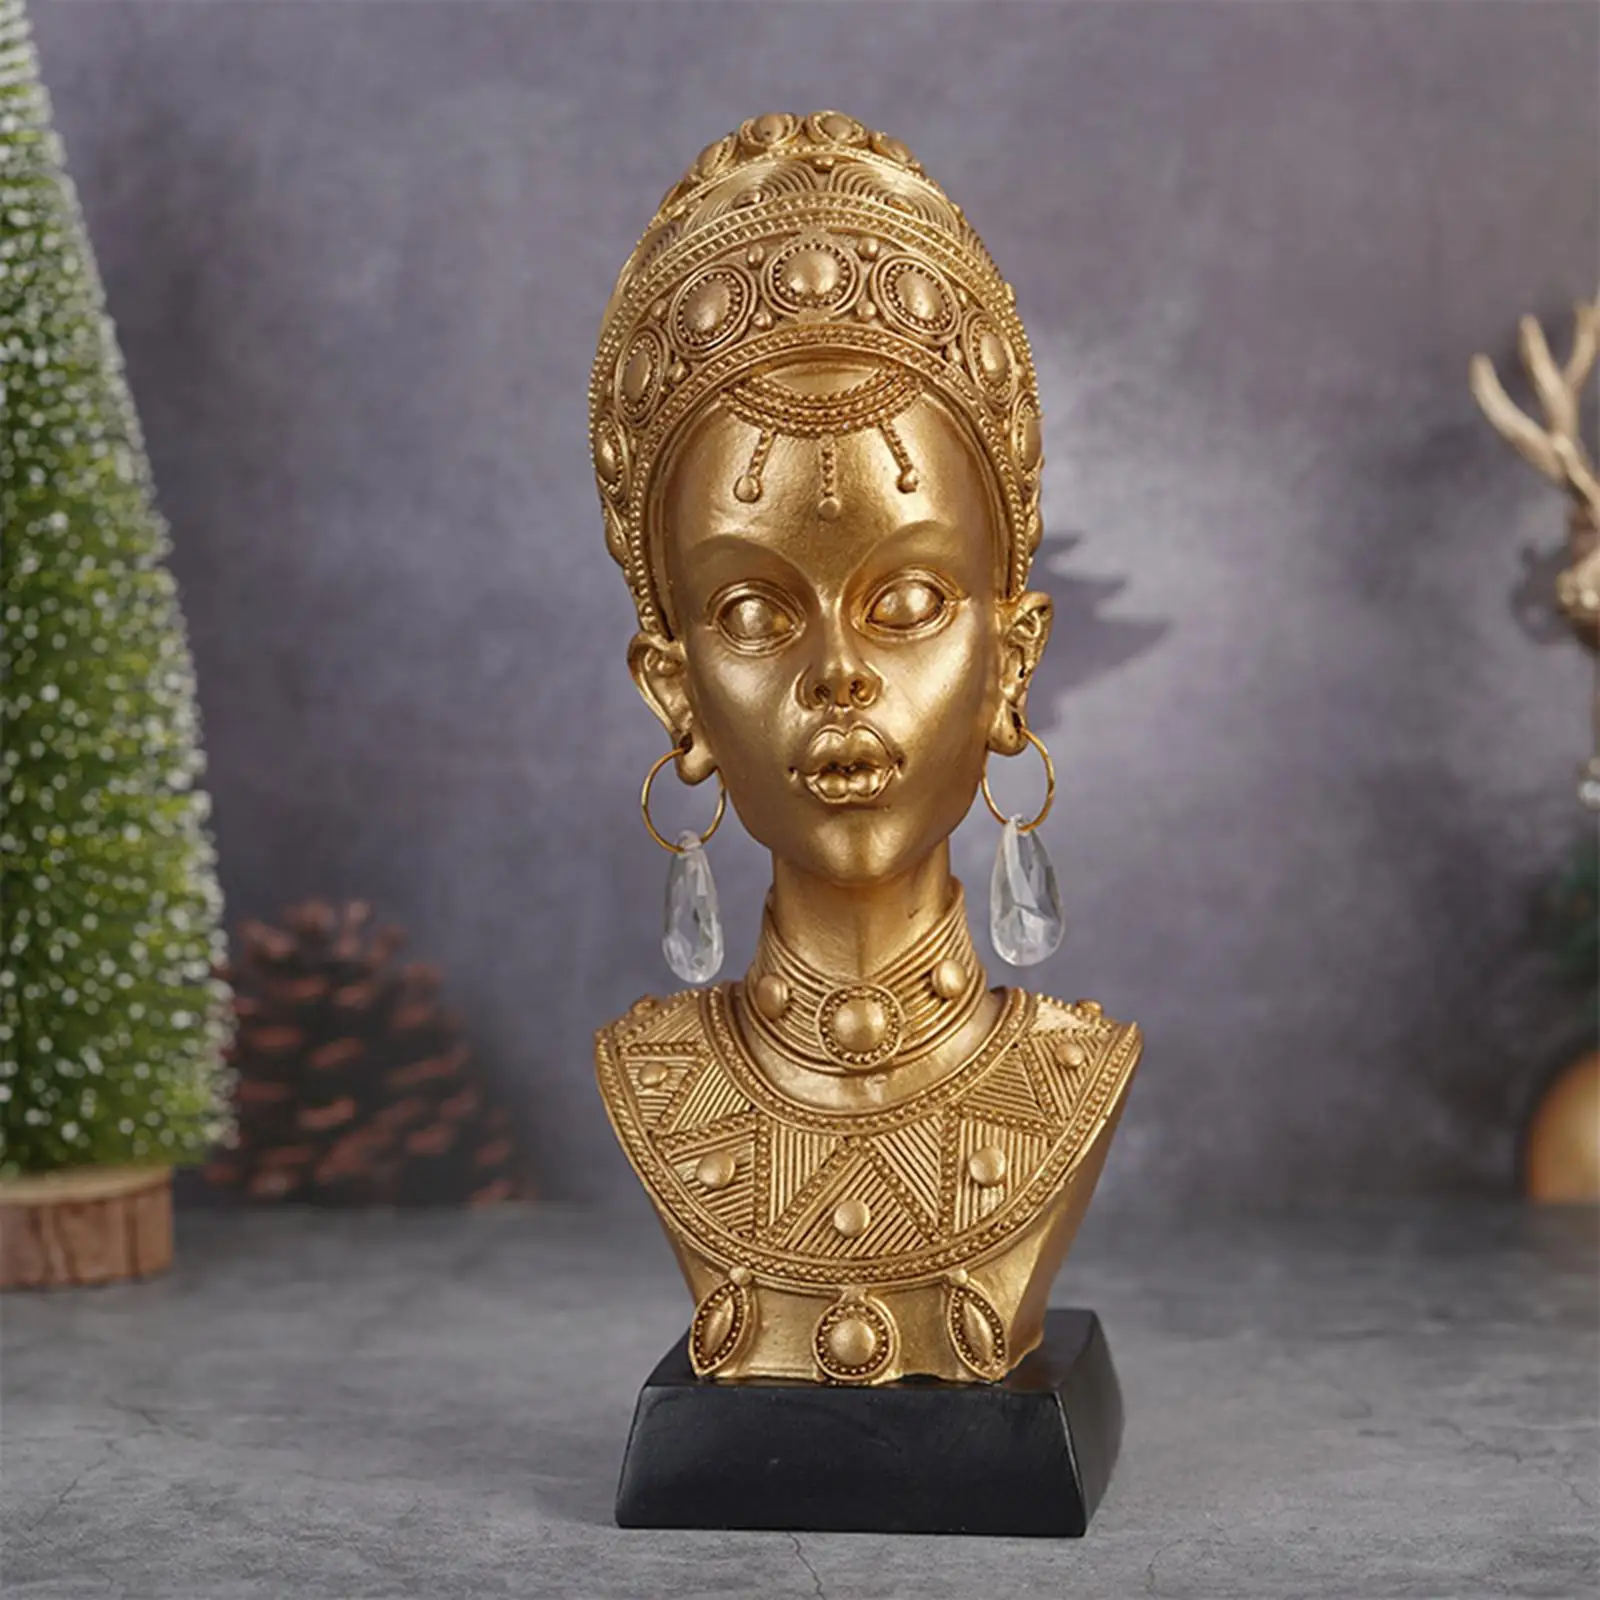 African Woman Statue Art Sculpture Women Figurine Table Centerpieces Home Decor Collectible Figure for Office Desktop Decor Gift